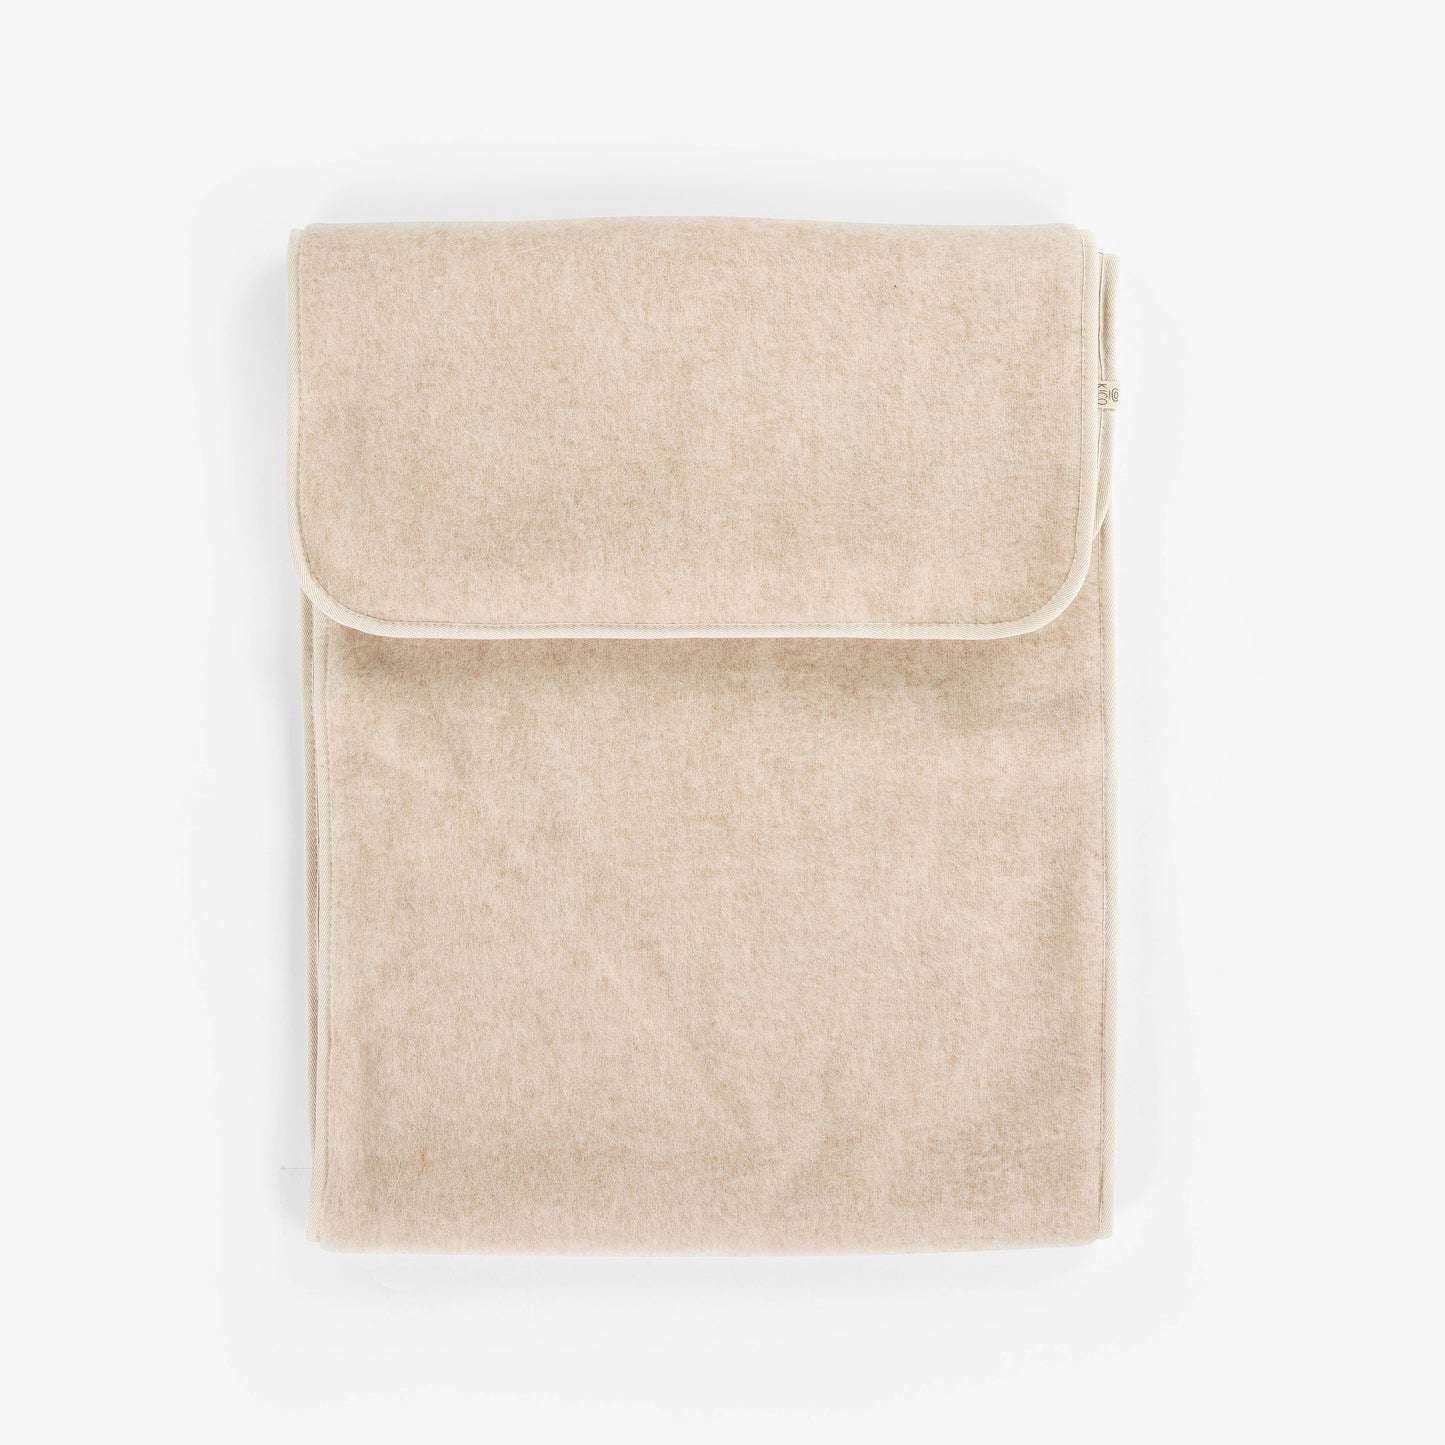 KiCo label 100% wool foot sleeping bag, blanket, with linen